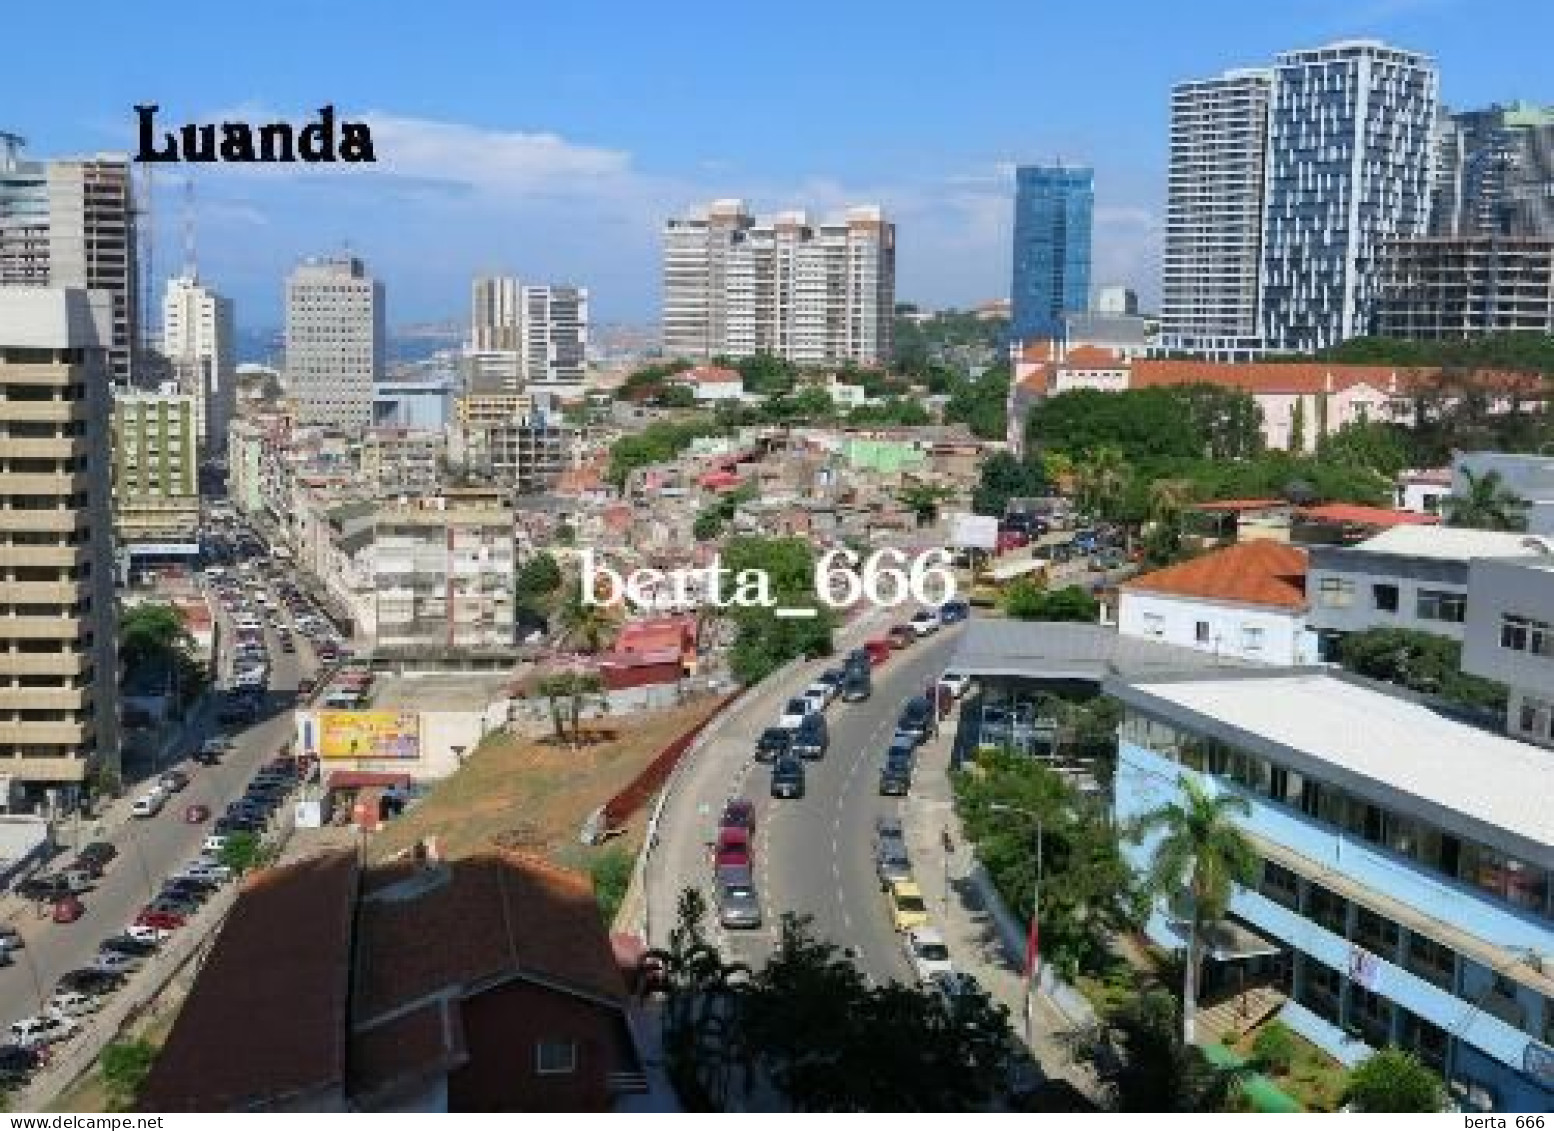 Angola Luanda Overview New Postcard - Angola